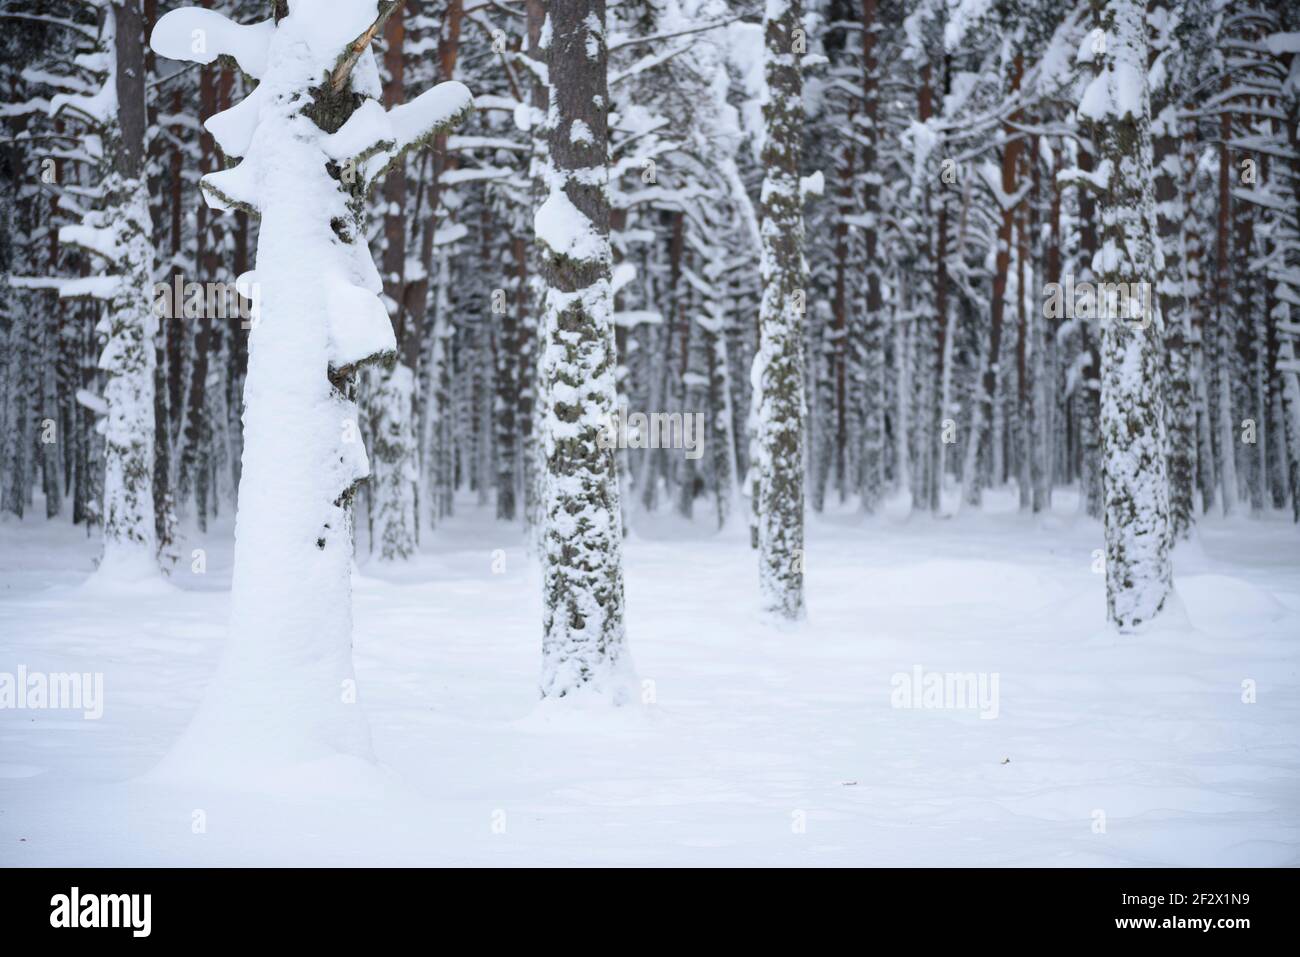 Capcir forest, in winter (Les Angles, Pyrénées Orientales, France) ESP: Bosque del Capcir, en invierno (Les Angles, Pyrénées Orientales, Francia) Stock Photo